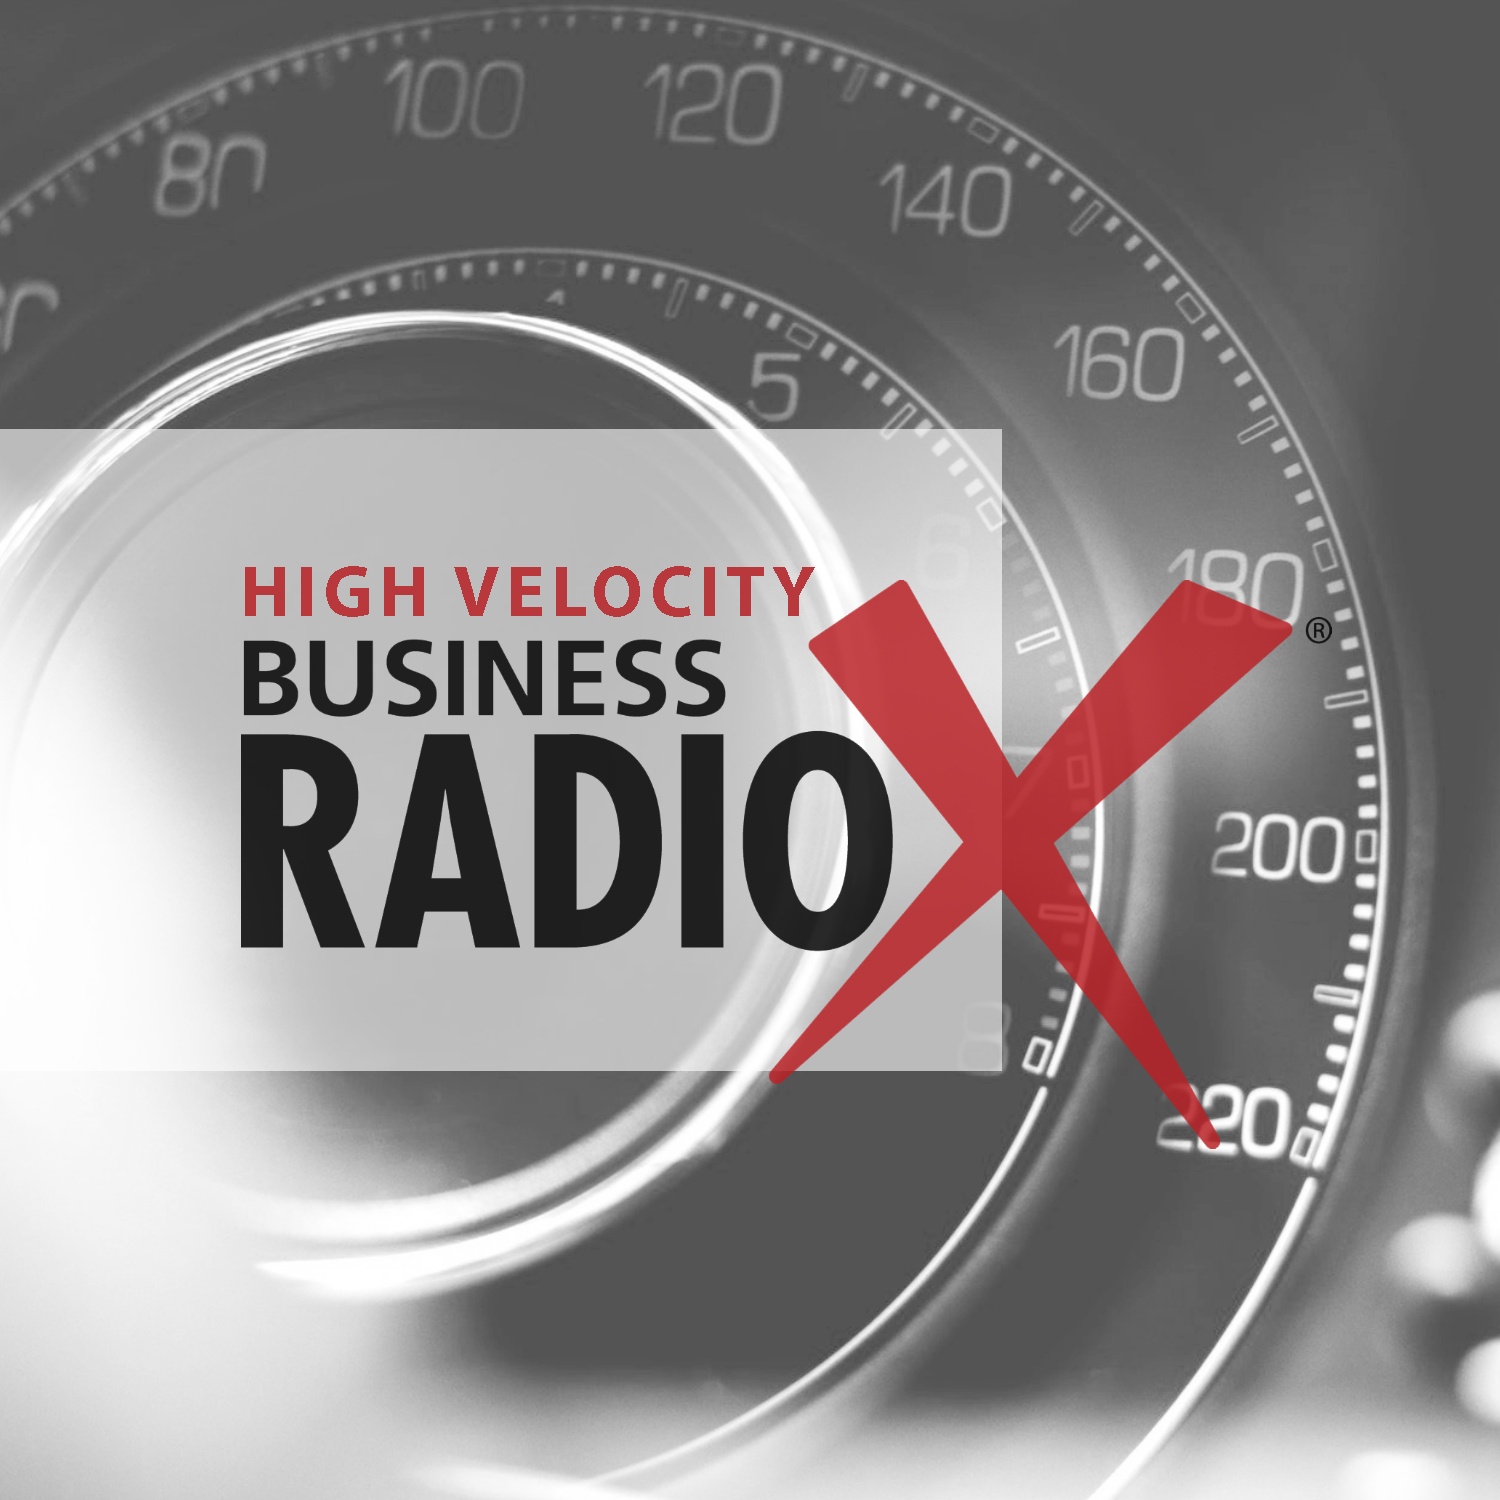 High Velocity Radio Interviews Orcatec CEO Arnaud Viviers and eCompliantz CEO Frank Mascarenhas